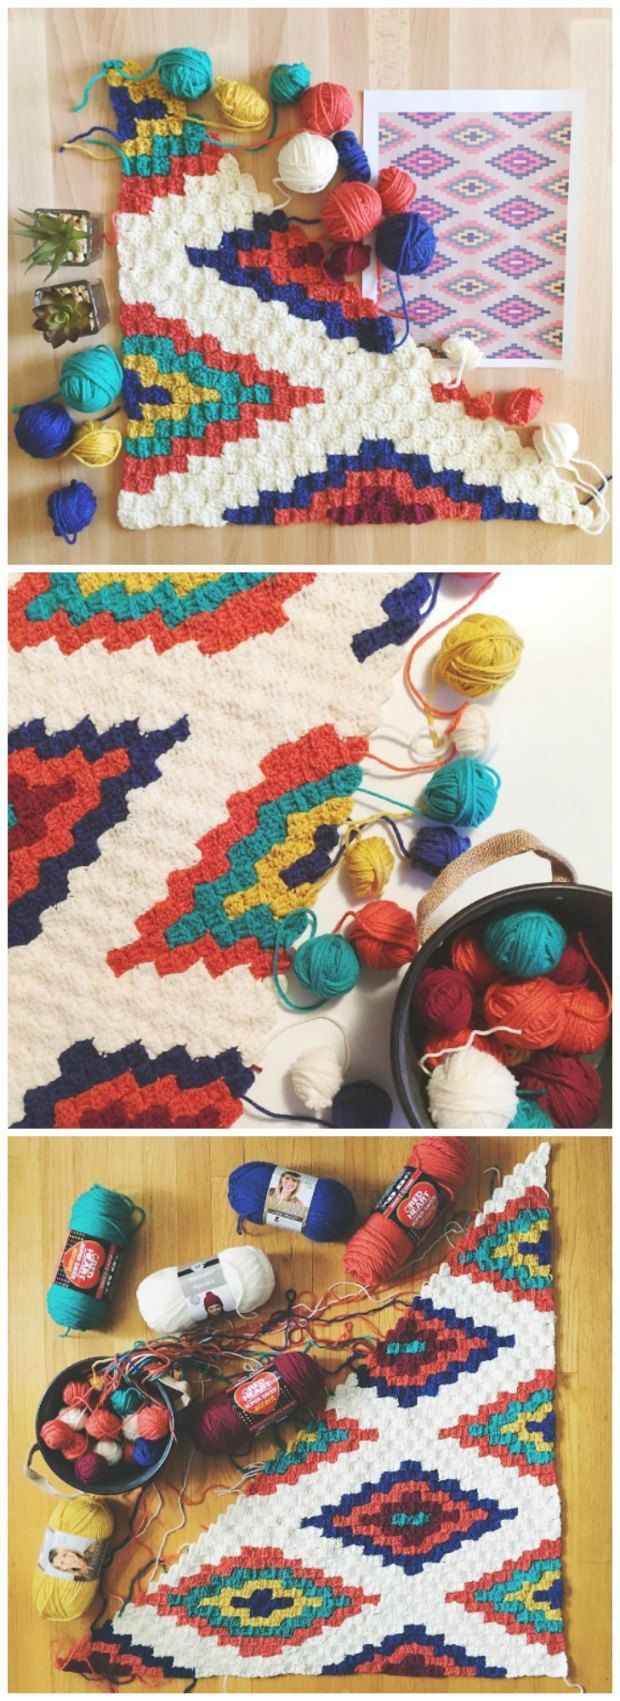 Corner-To-Corner-Crochet-Southwestern-Afghan-Throw-blanket.jpg